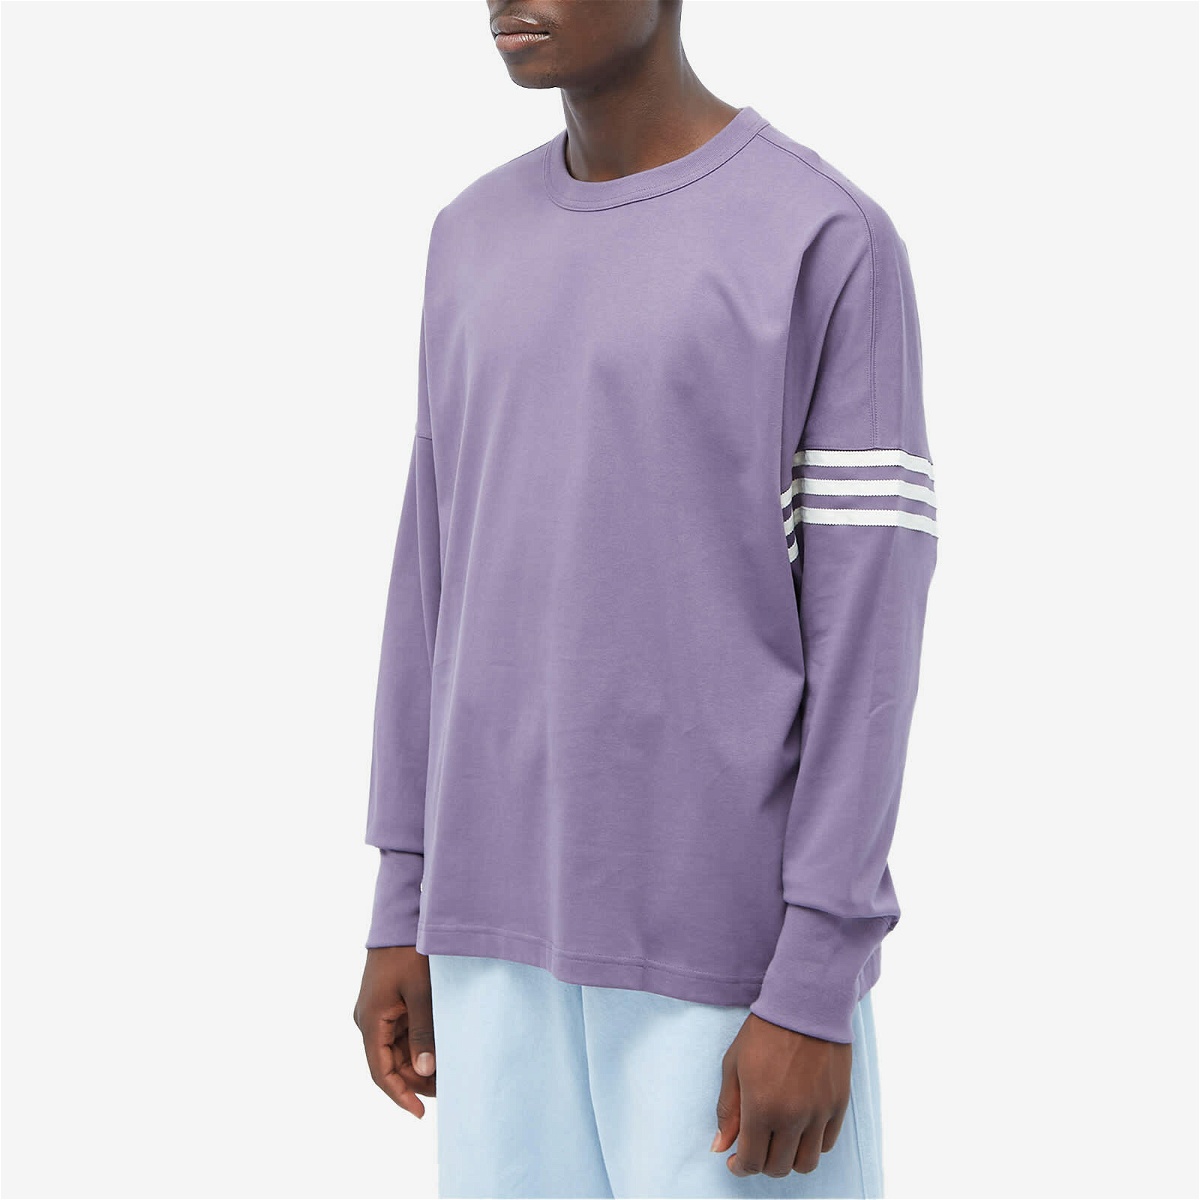 Adidas Men's Long Sleeve Neuclassics T-Shirt in Shadow Violet adidas